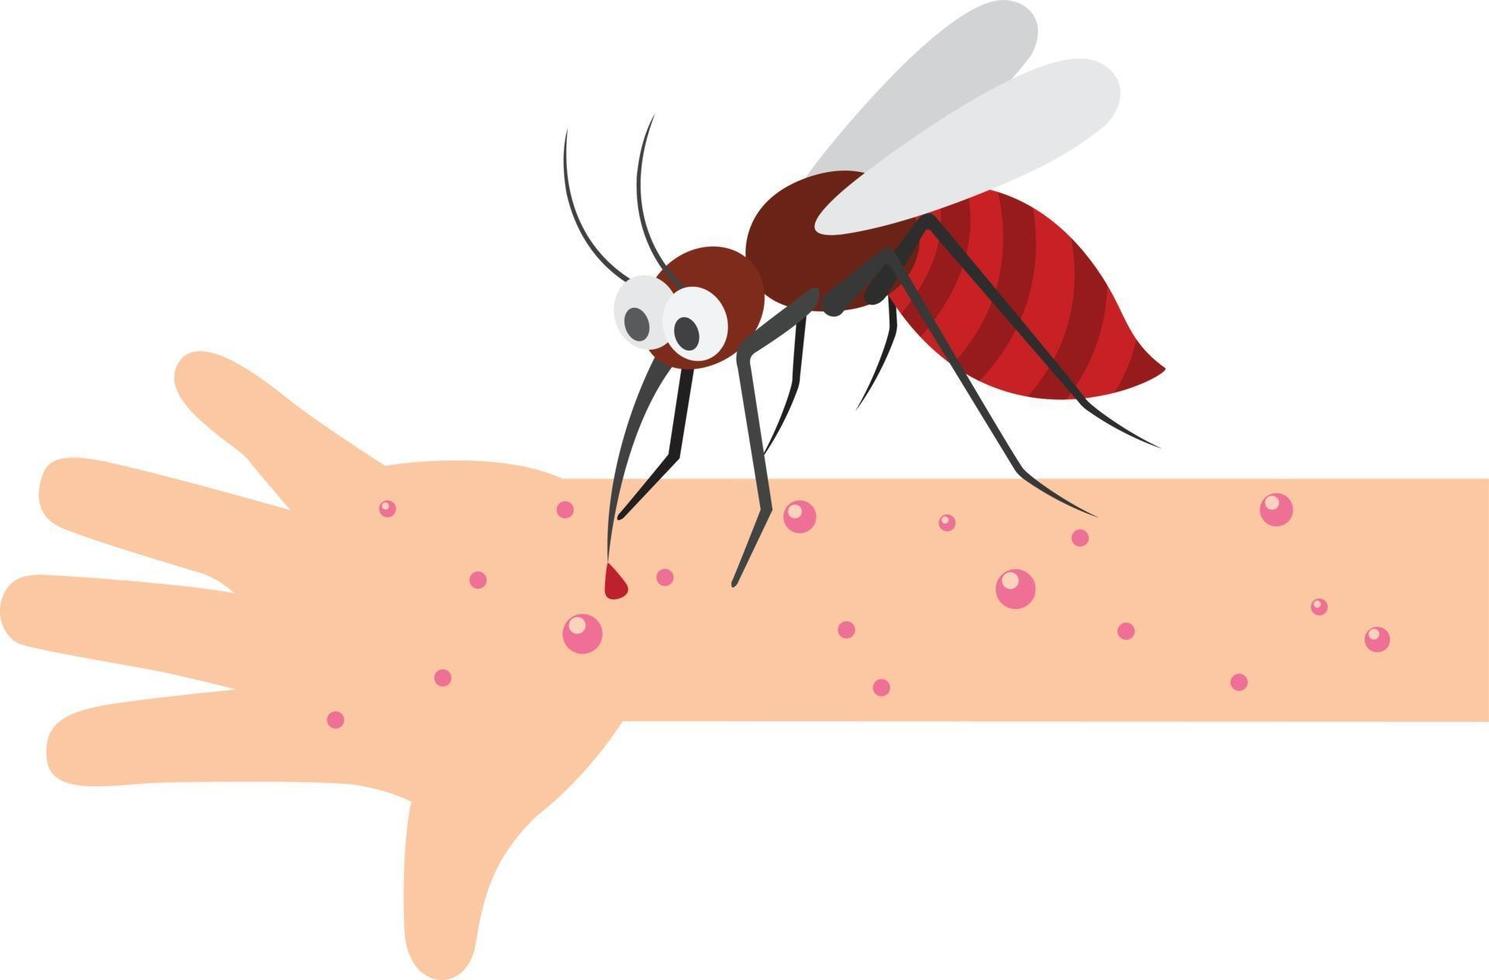 Mosquito bite. illustration. vector